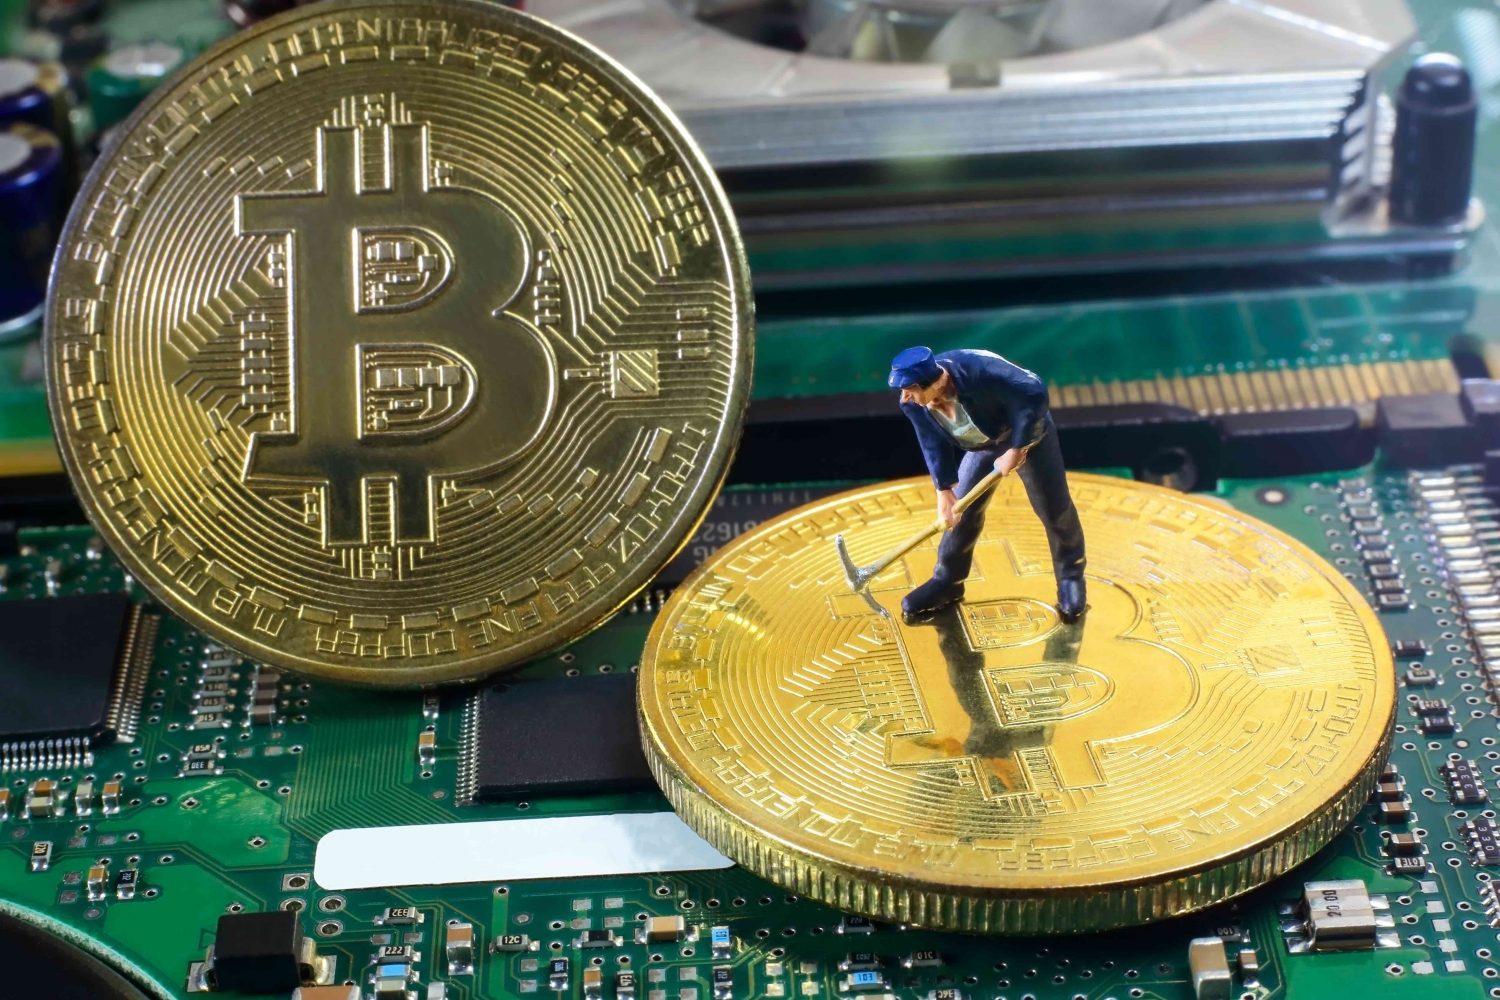 bitcoin miners - ماینرهای بیت کوین در ماه گذشته، 368 میلیون دلار درآمد داشتند